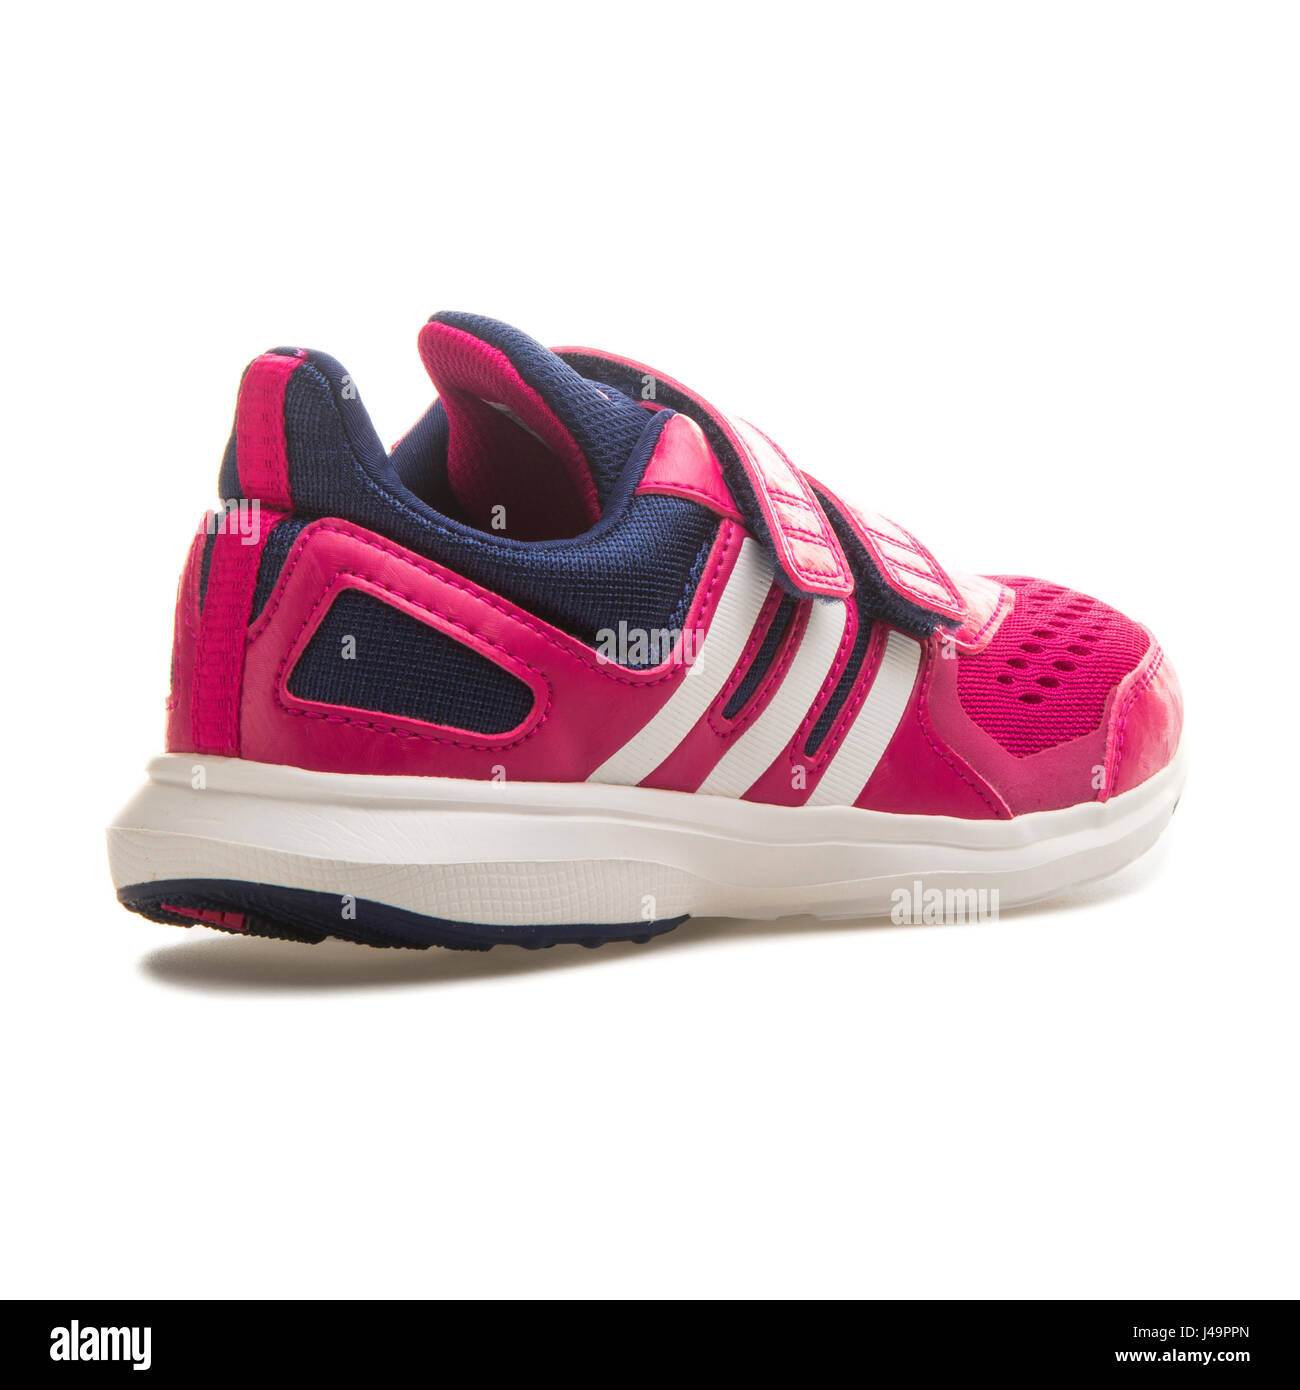 Adidas Hyperfast 2.0 cf k Pink - S83004 Stock Photo - Alamy